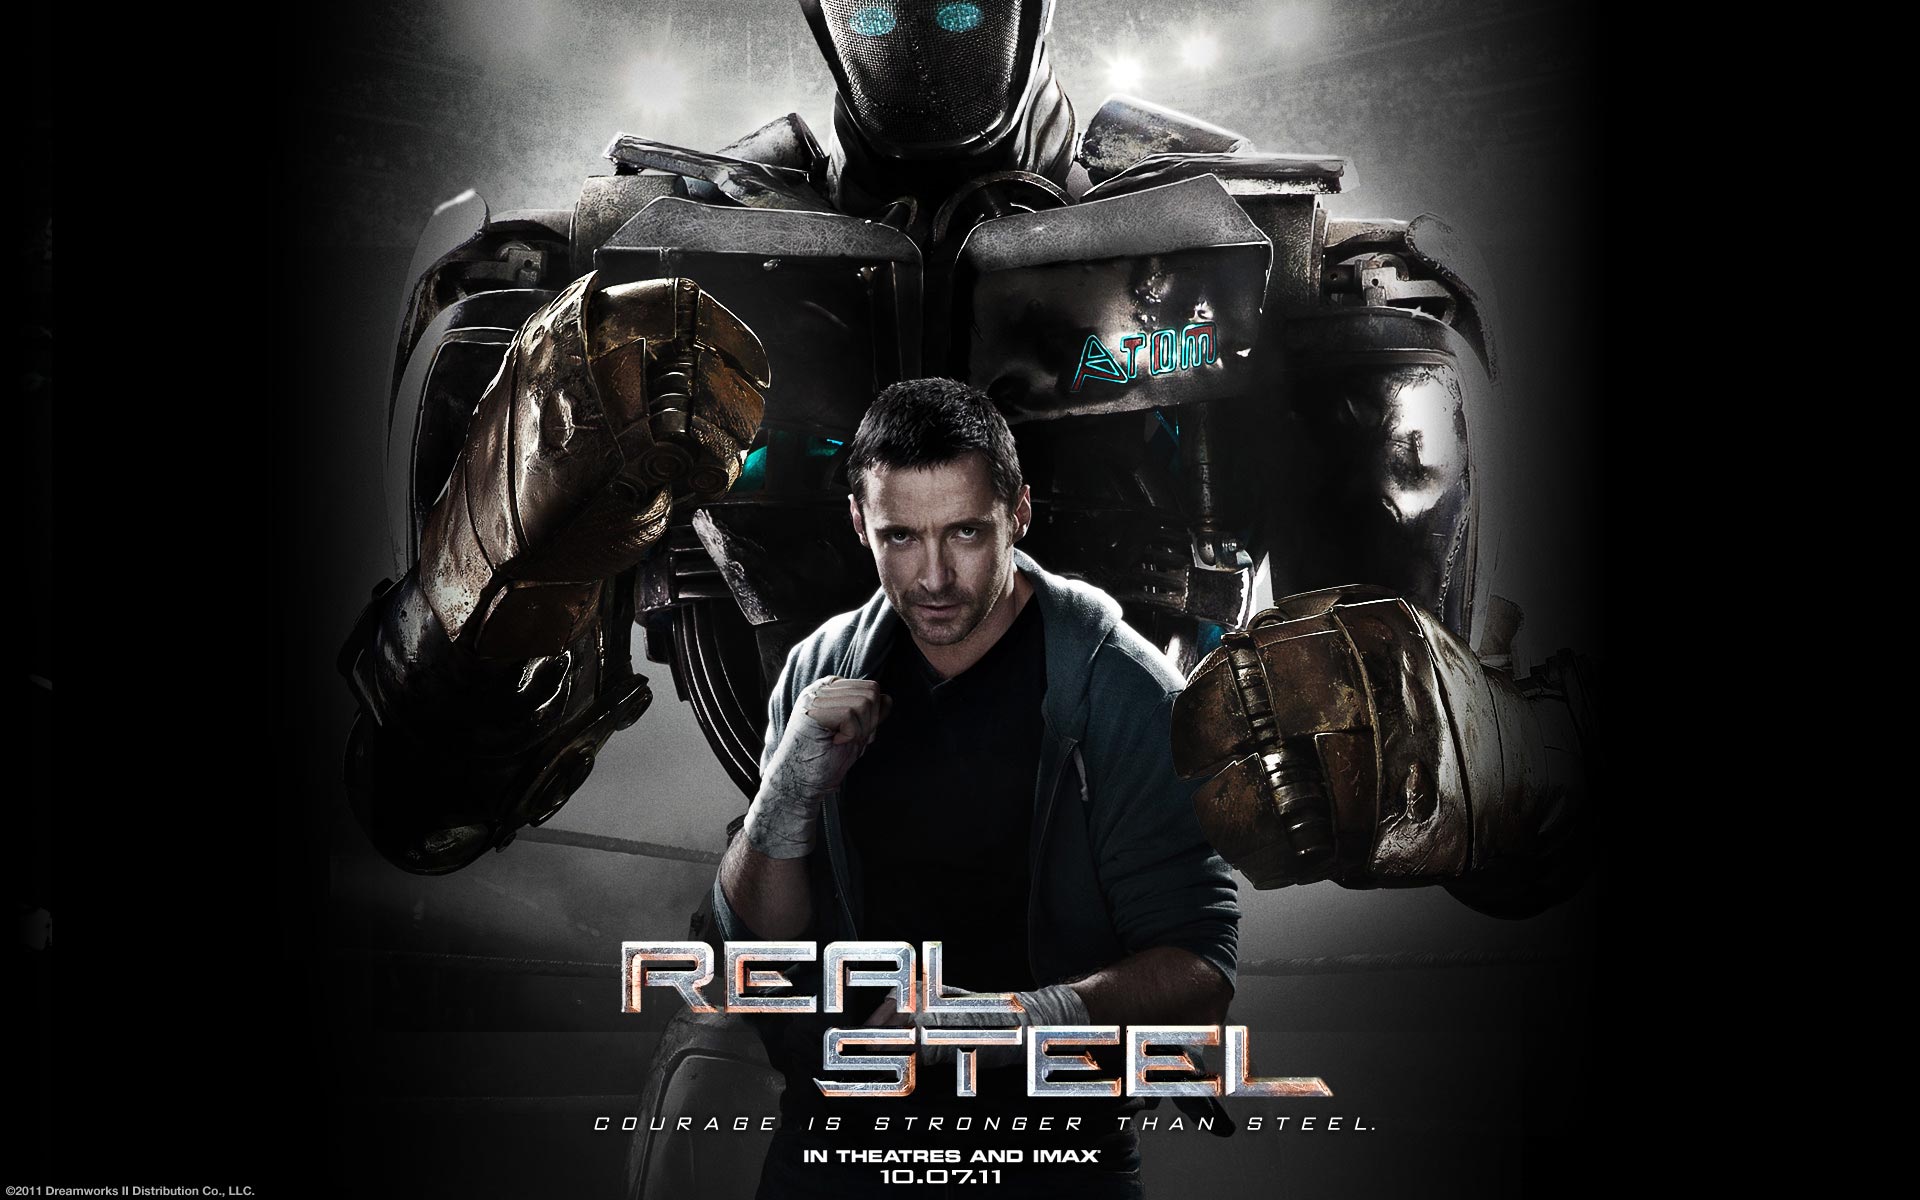 Real Steel #2